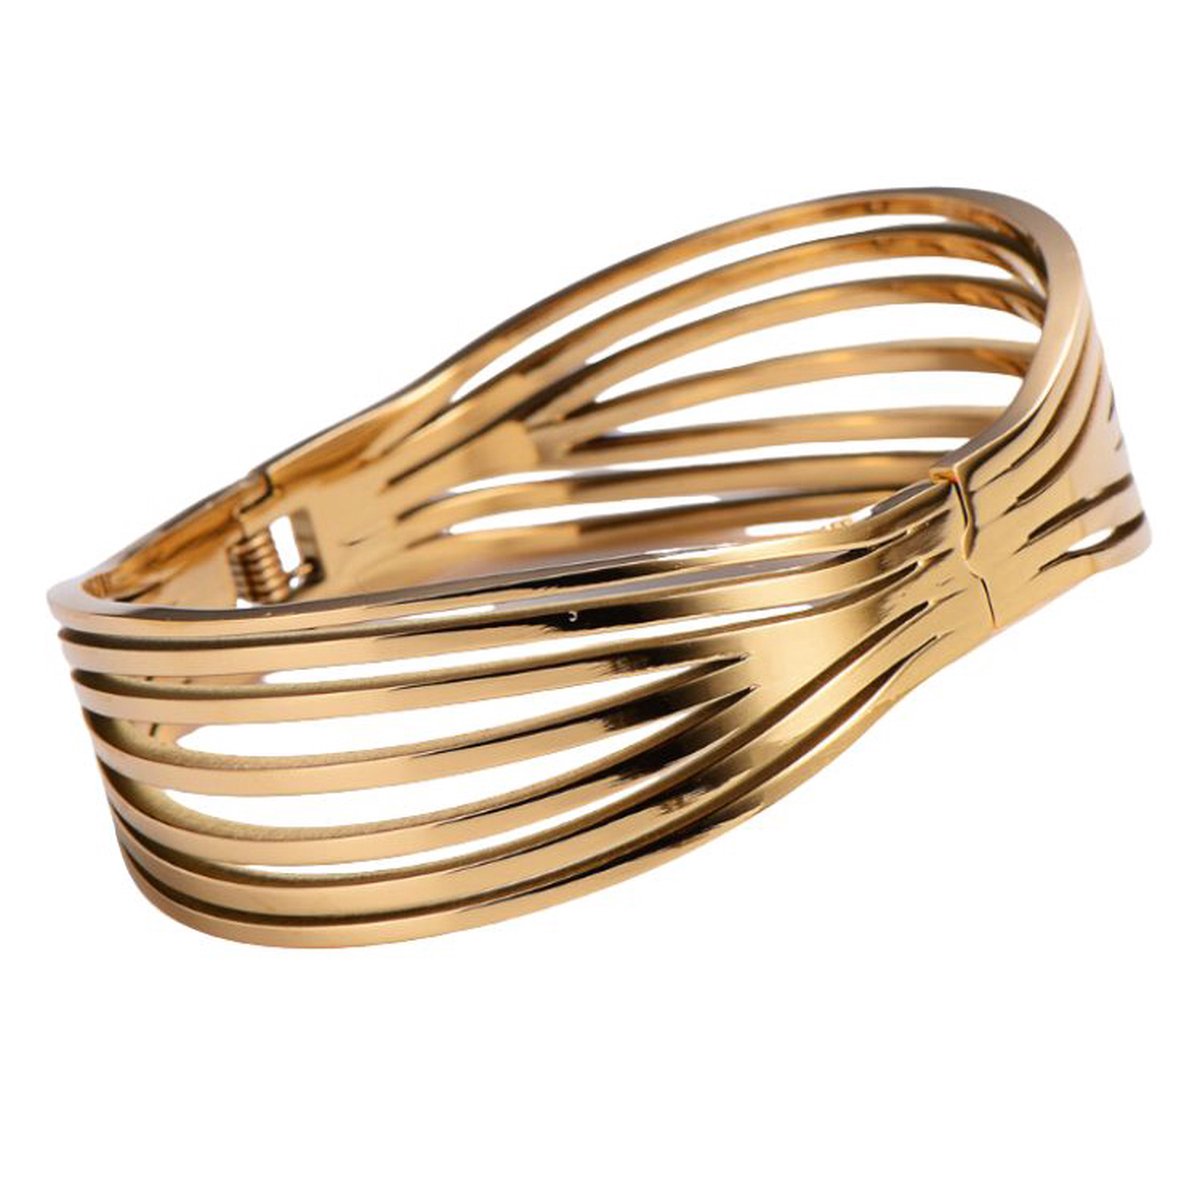 Marama - armband Noor - RVS gold plated - bangle - damesarmband - scharniersluiting - luxe cadeau dames